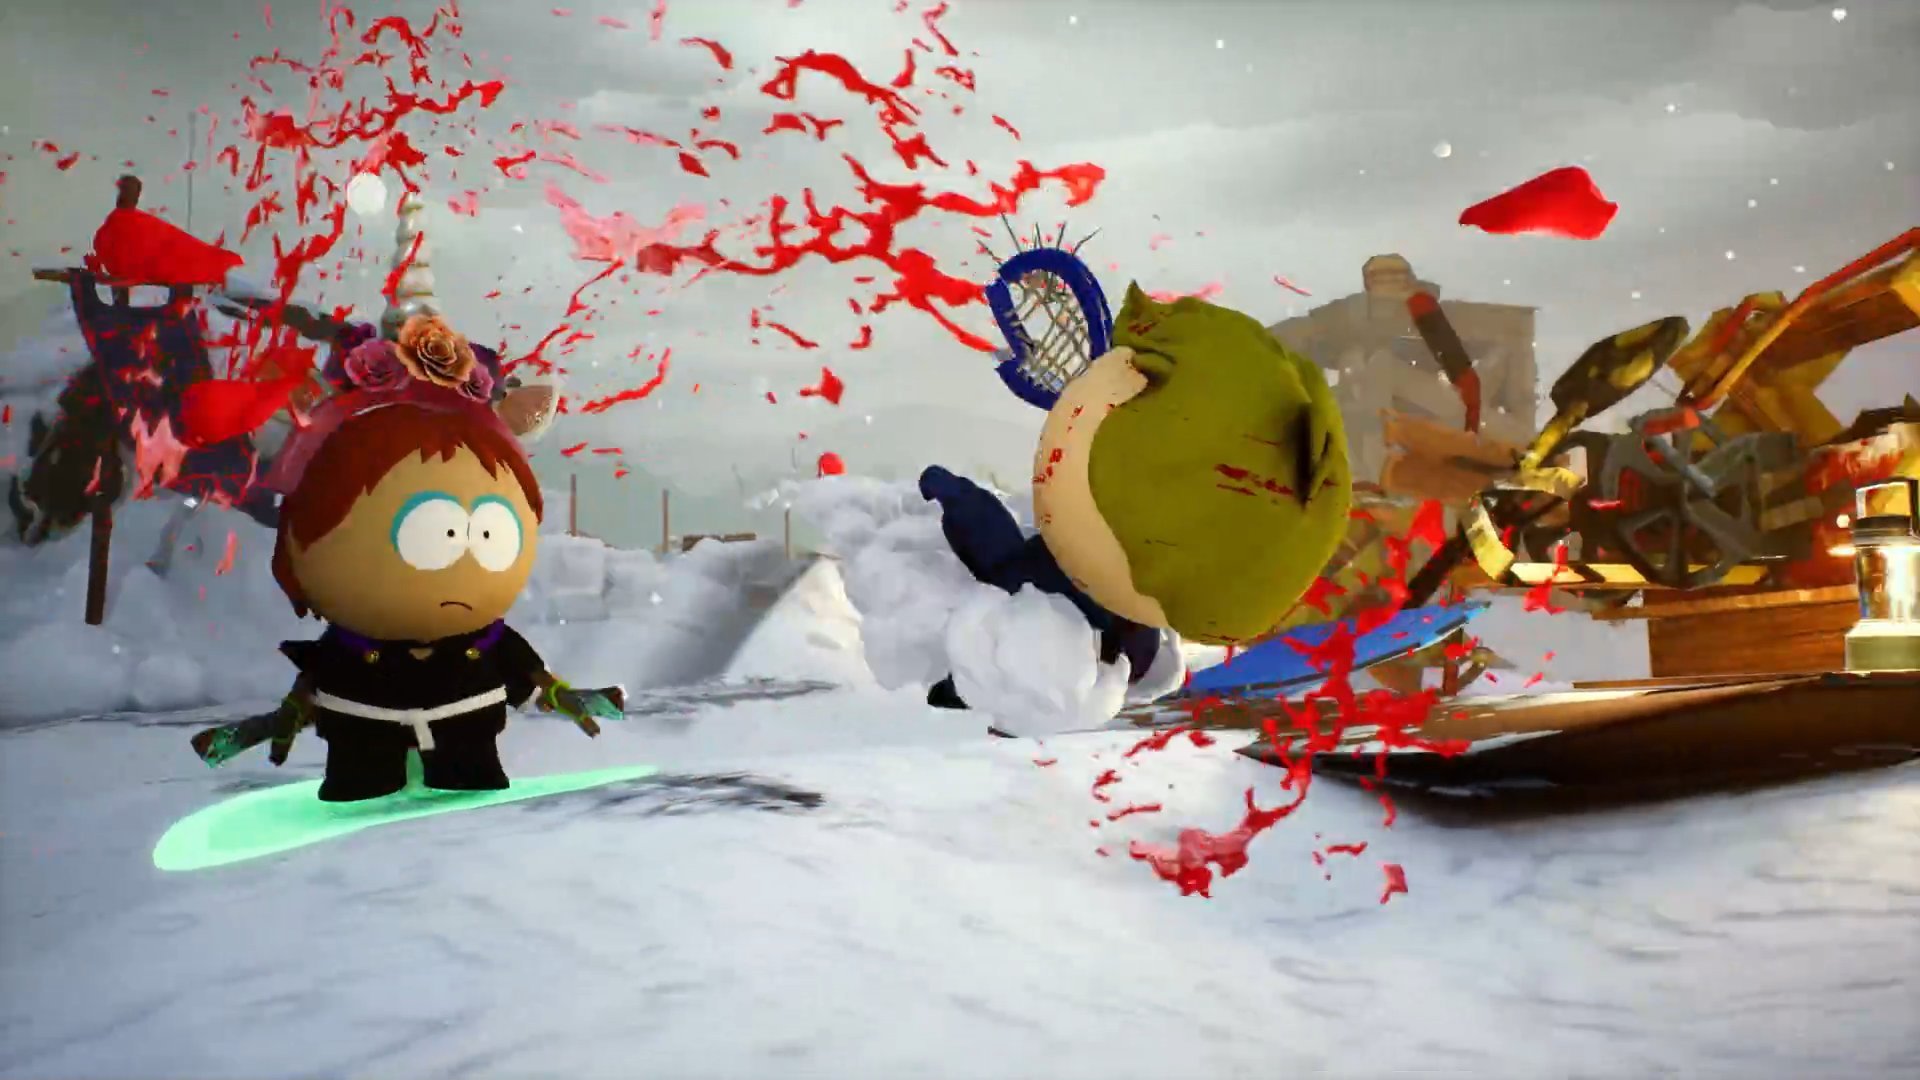 South Park Snow Day: A Hilarious Winter Adventure Awaits